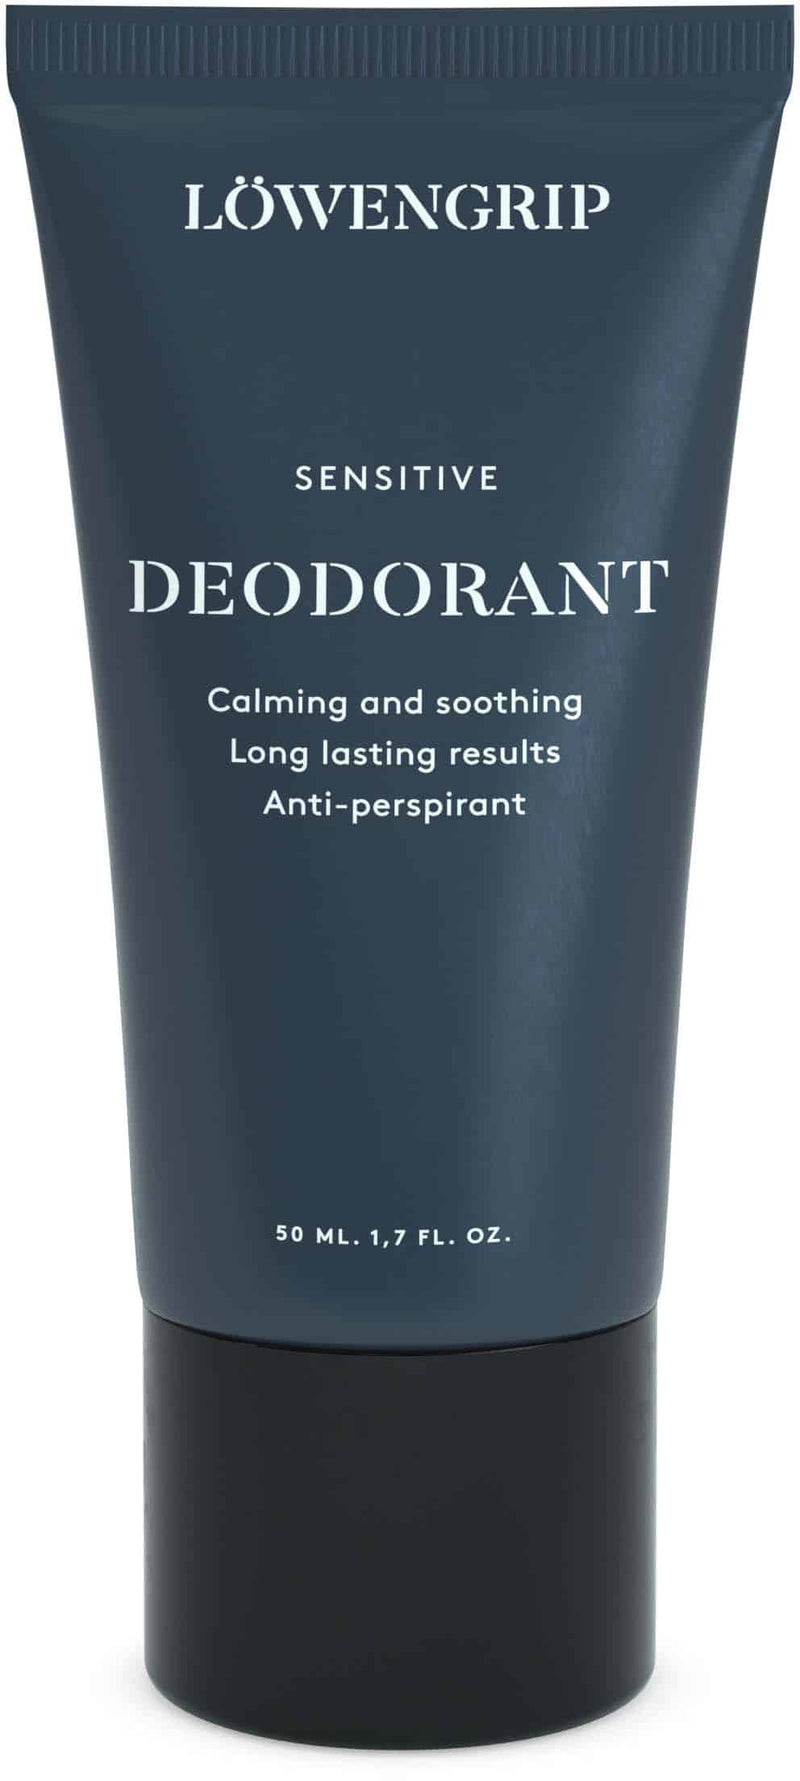 Löwengrip Ball deodorant for sensitive skin (50 ml)